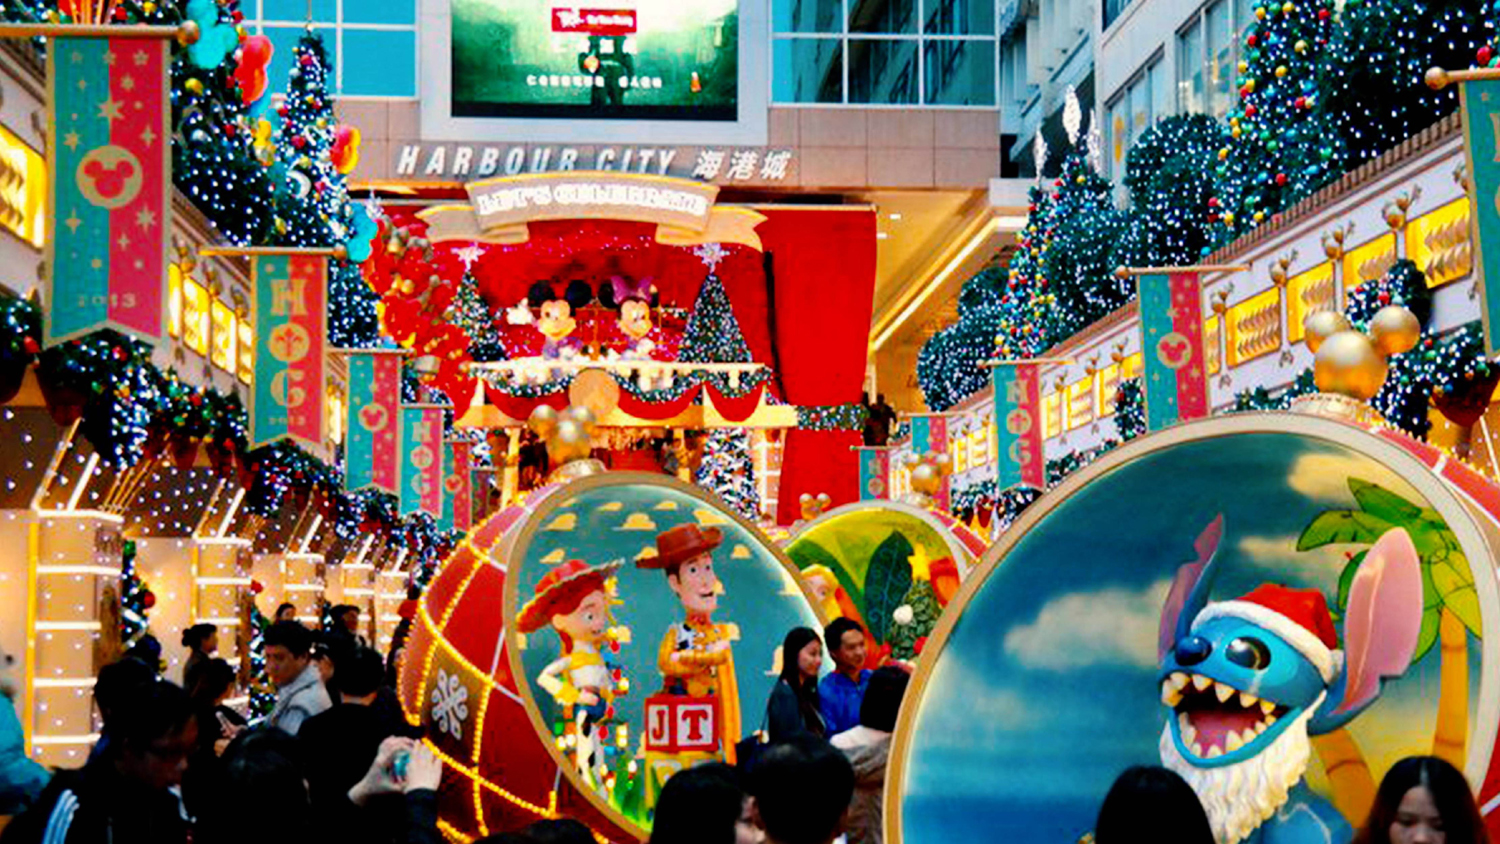 HongKong Harbour City x Disneyland “Let’s Celebrate”